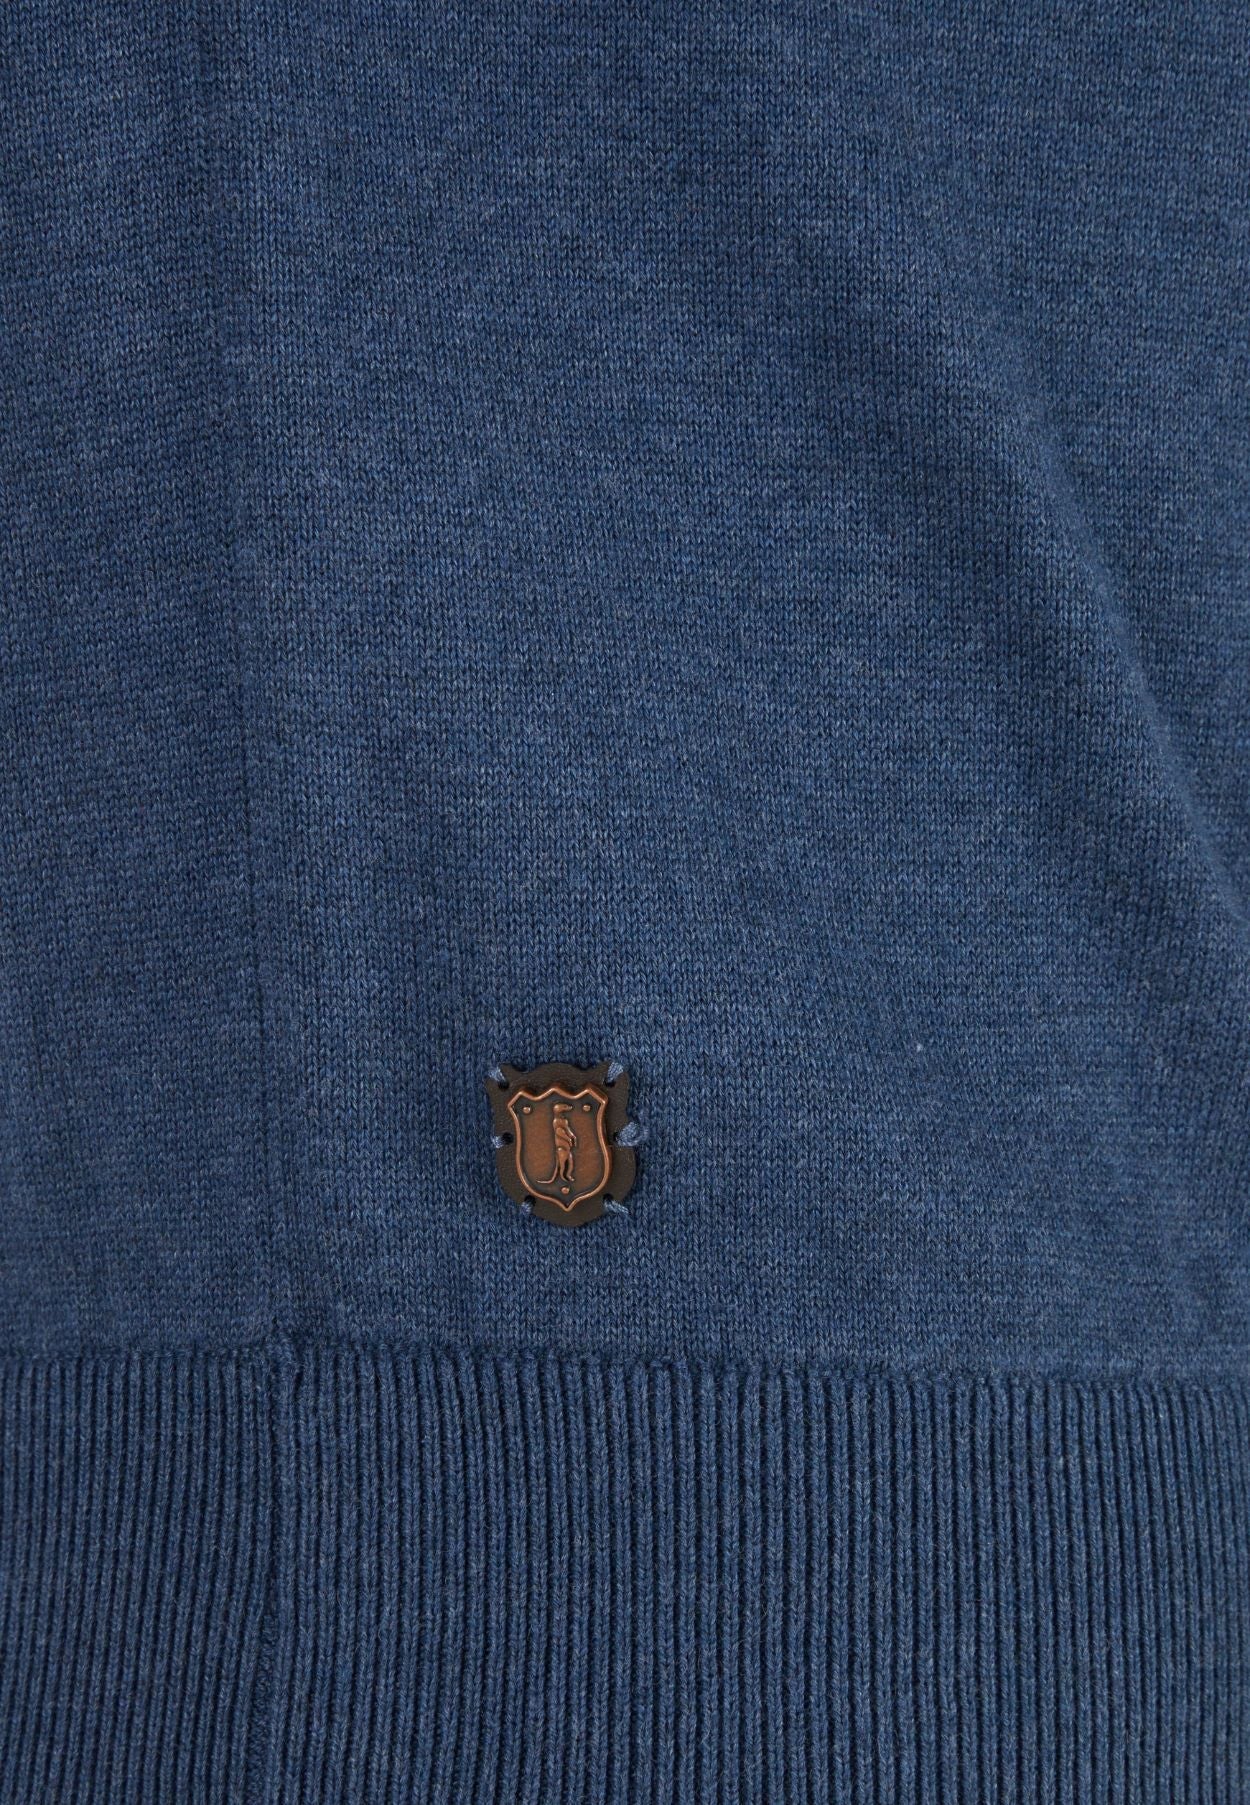 Men's Harry 1/4 Zip Knit Jumper - Blue Chine-Close Up View